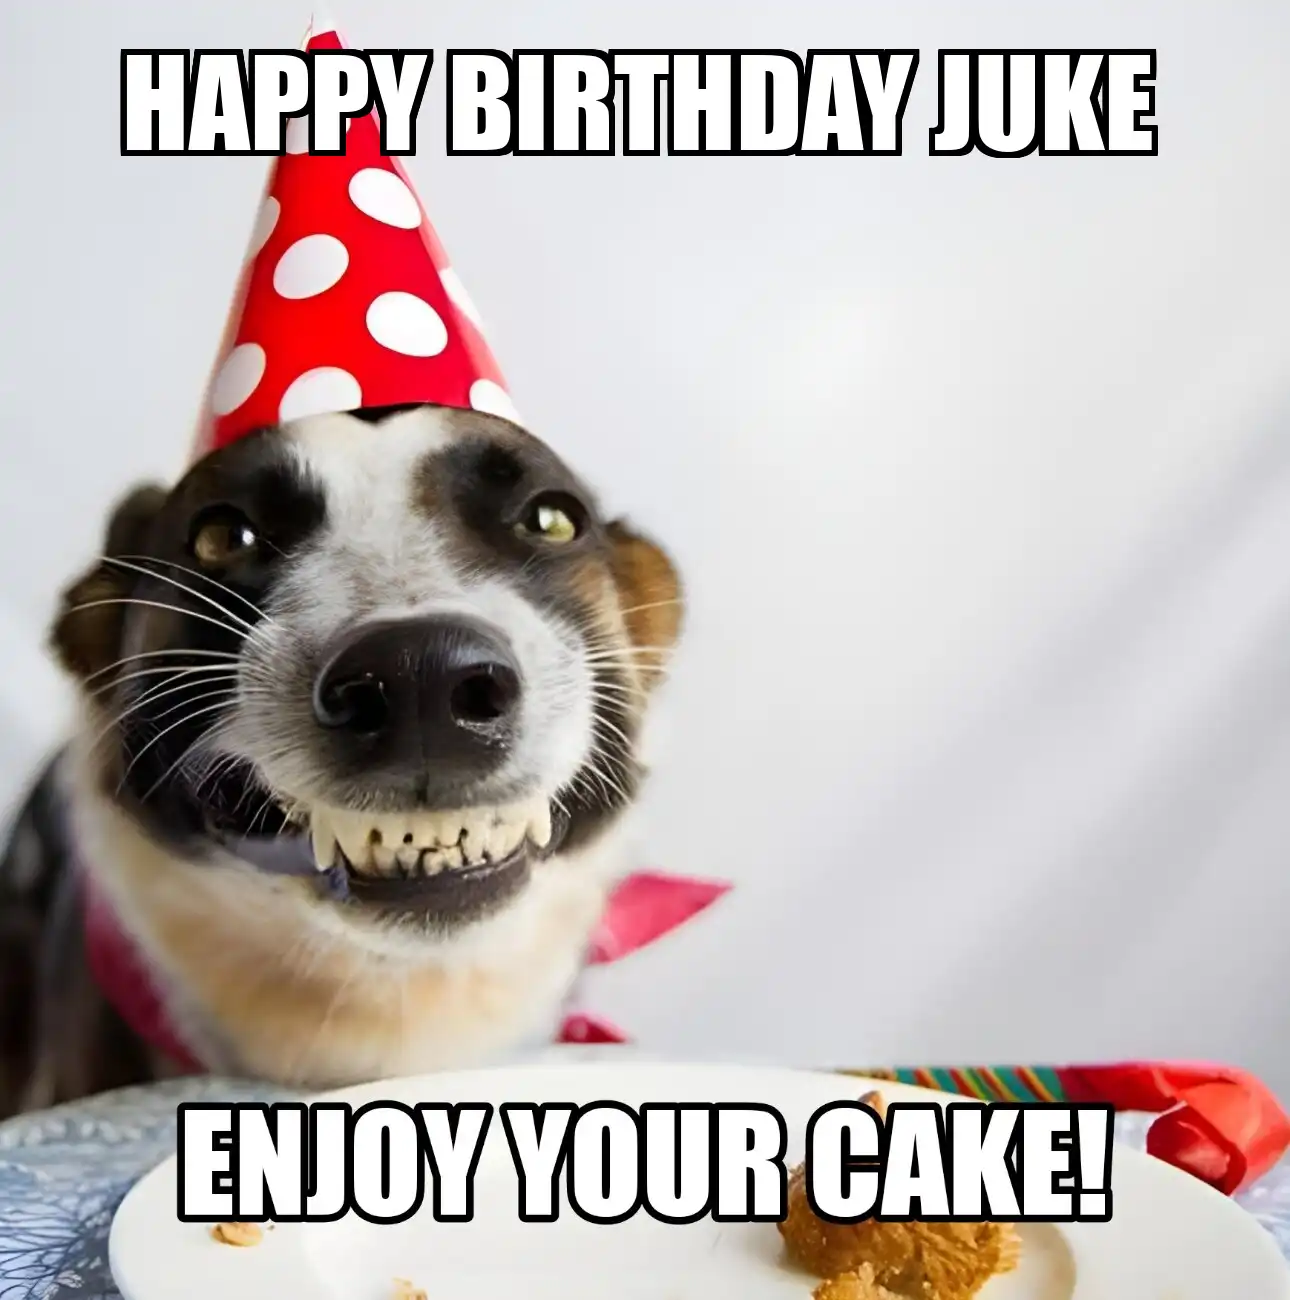 Happy Birthday Juke Enjoy Your Cake Dog Meme